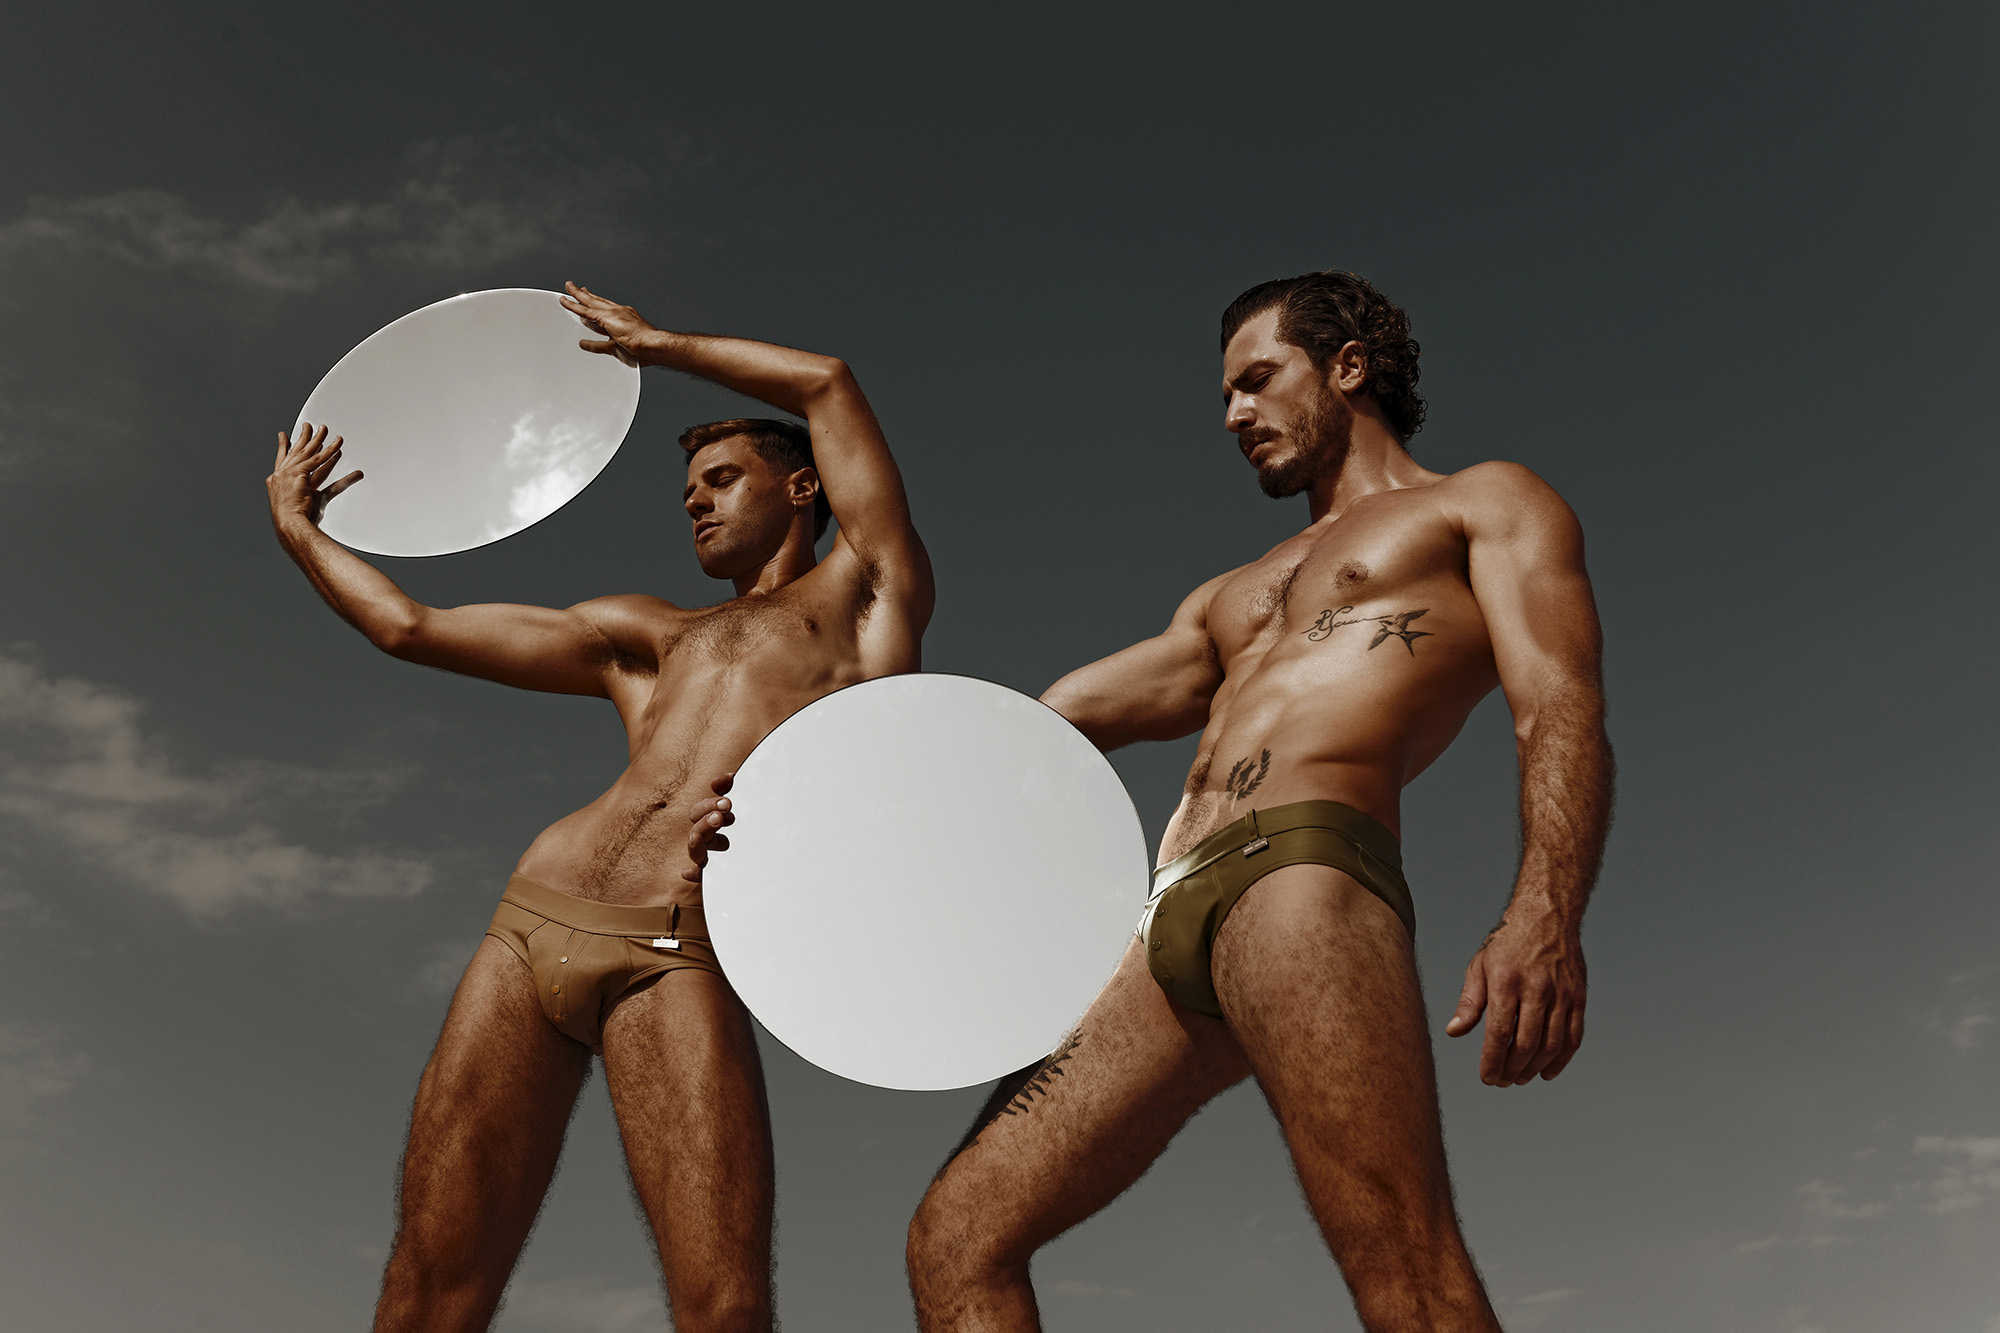 Anton Schembri & Raphael Pace by Kris Micallef for MODUS VIVENDI Leather Legacy campaign.